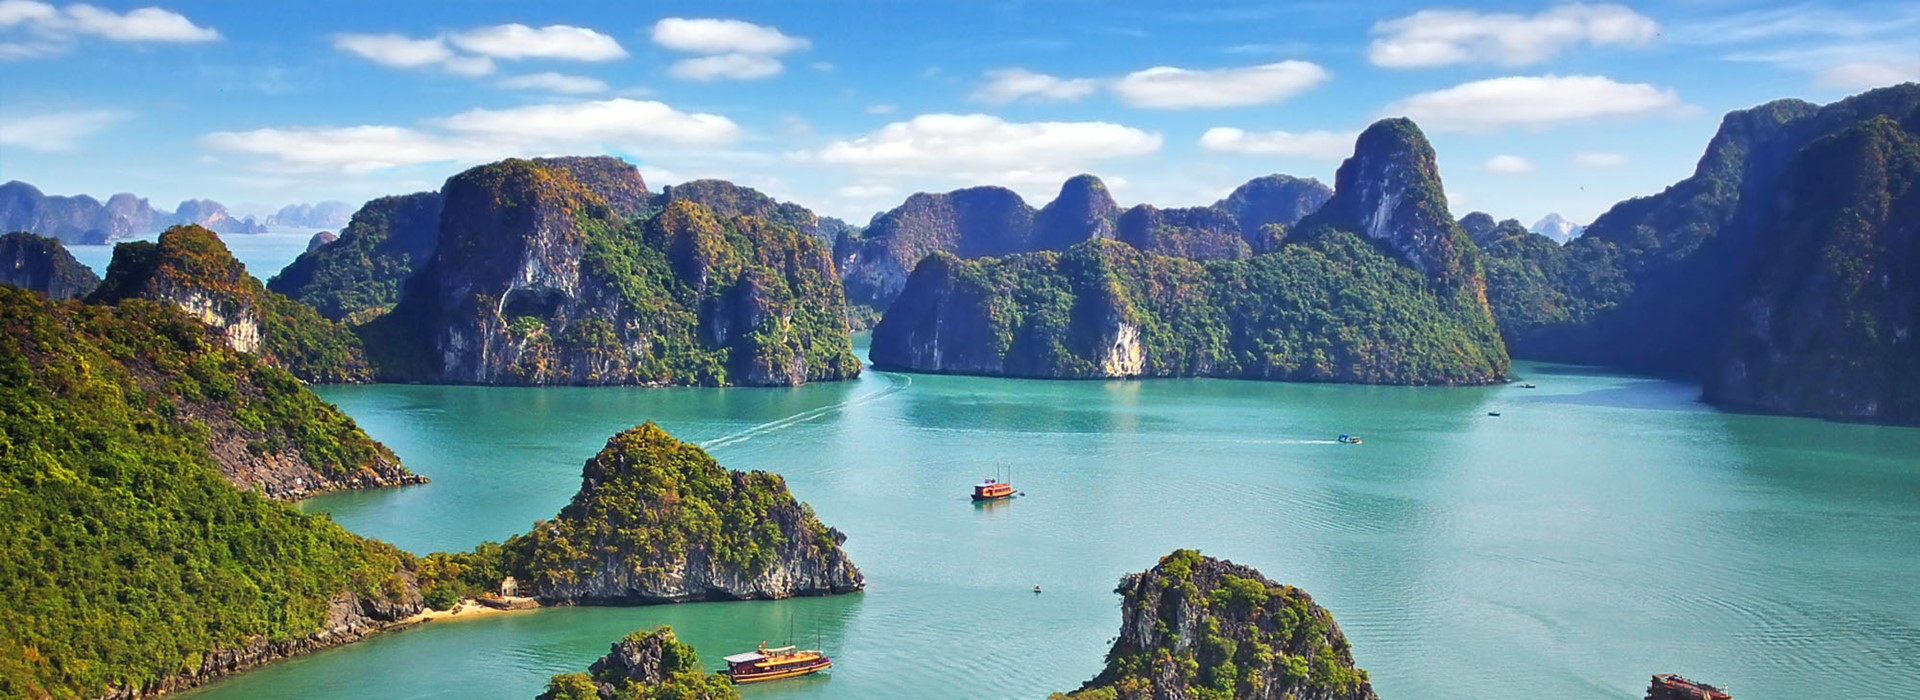 tourhub | Newmarket Holidays | Classic Vietnam, Cambodia & Laos 